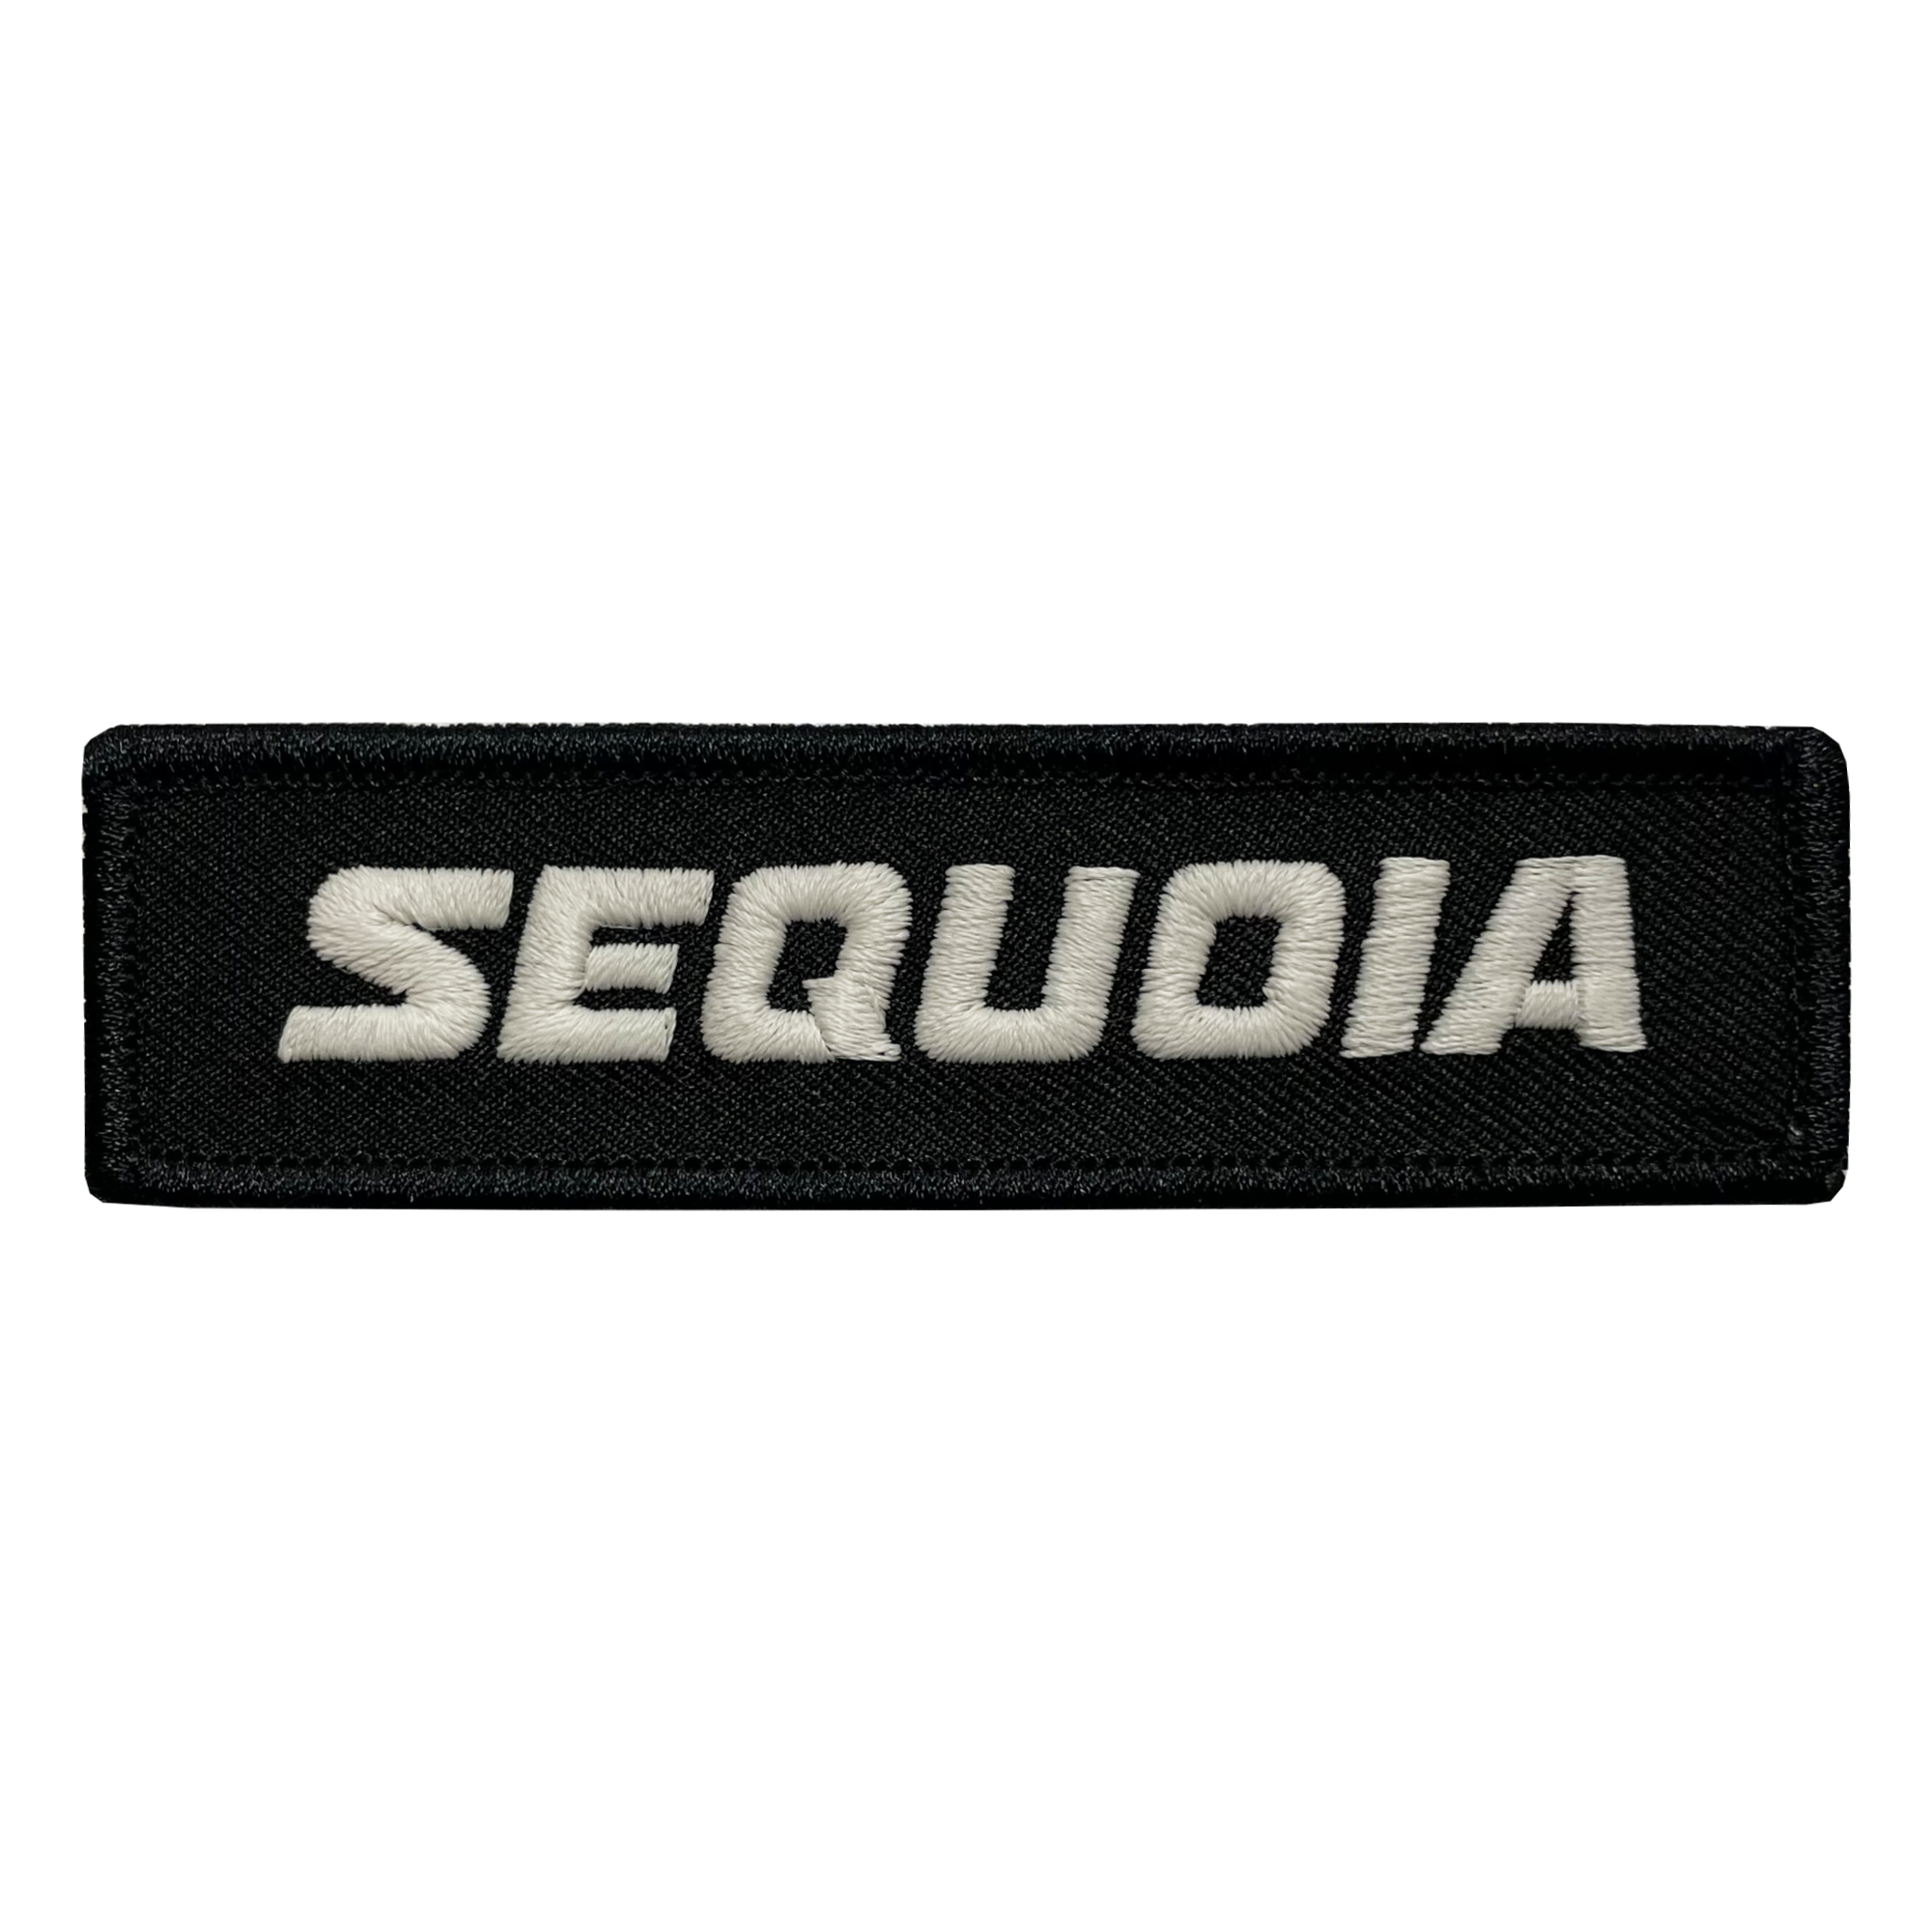 Sequoia Black Name Tape Patch - GZila Designs